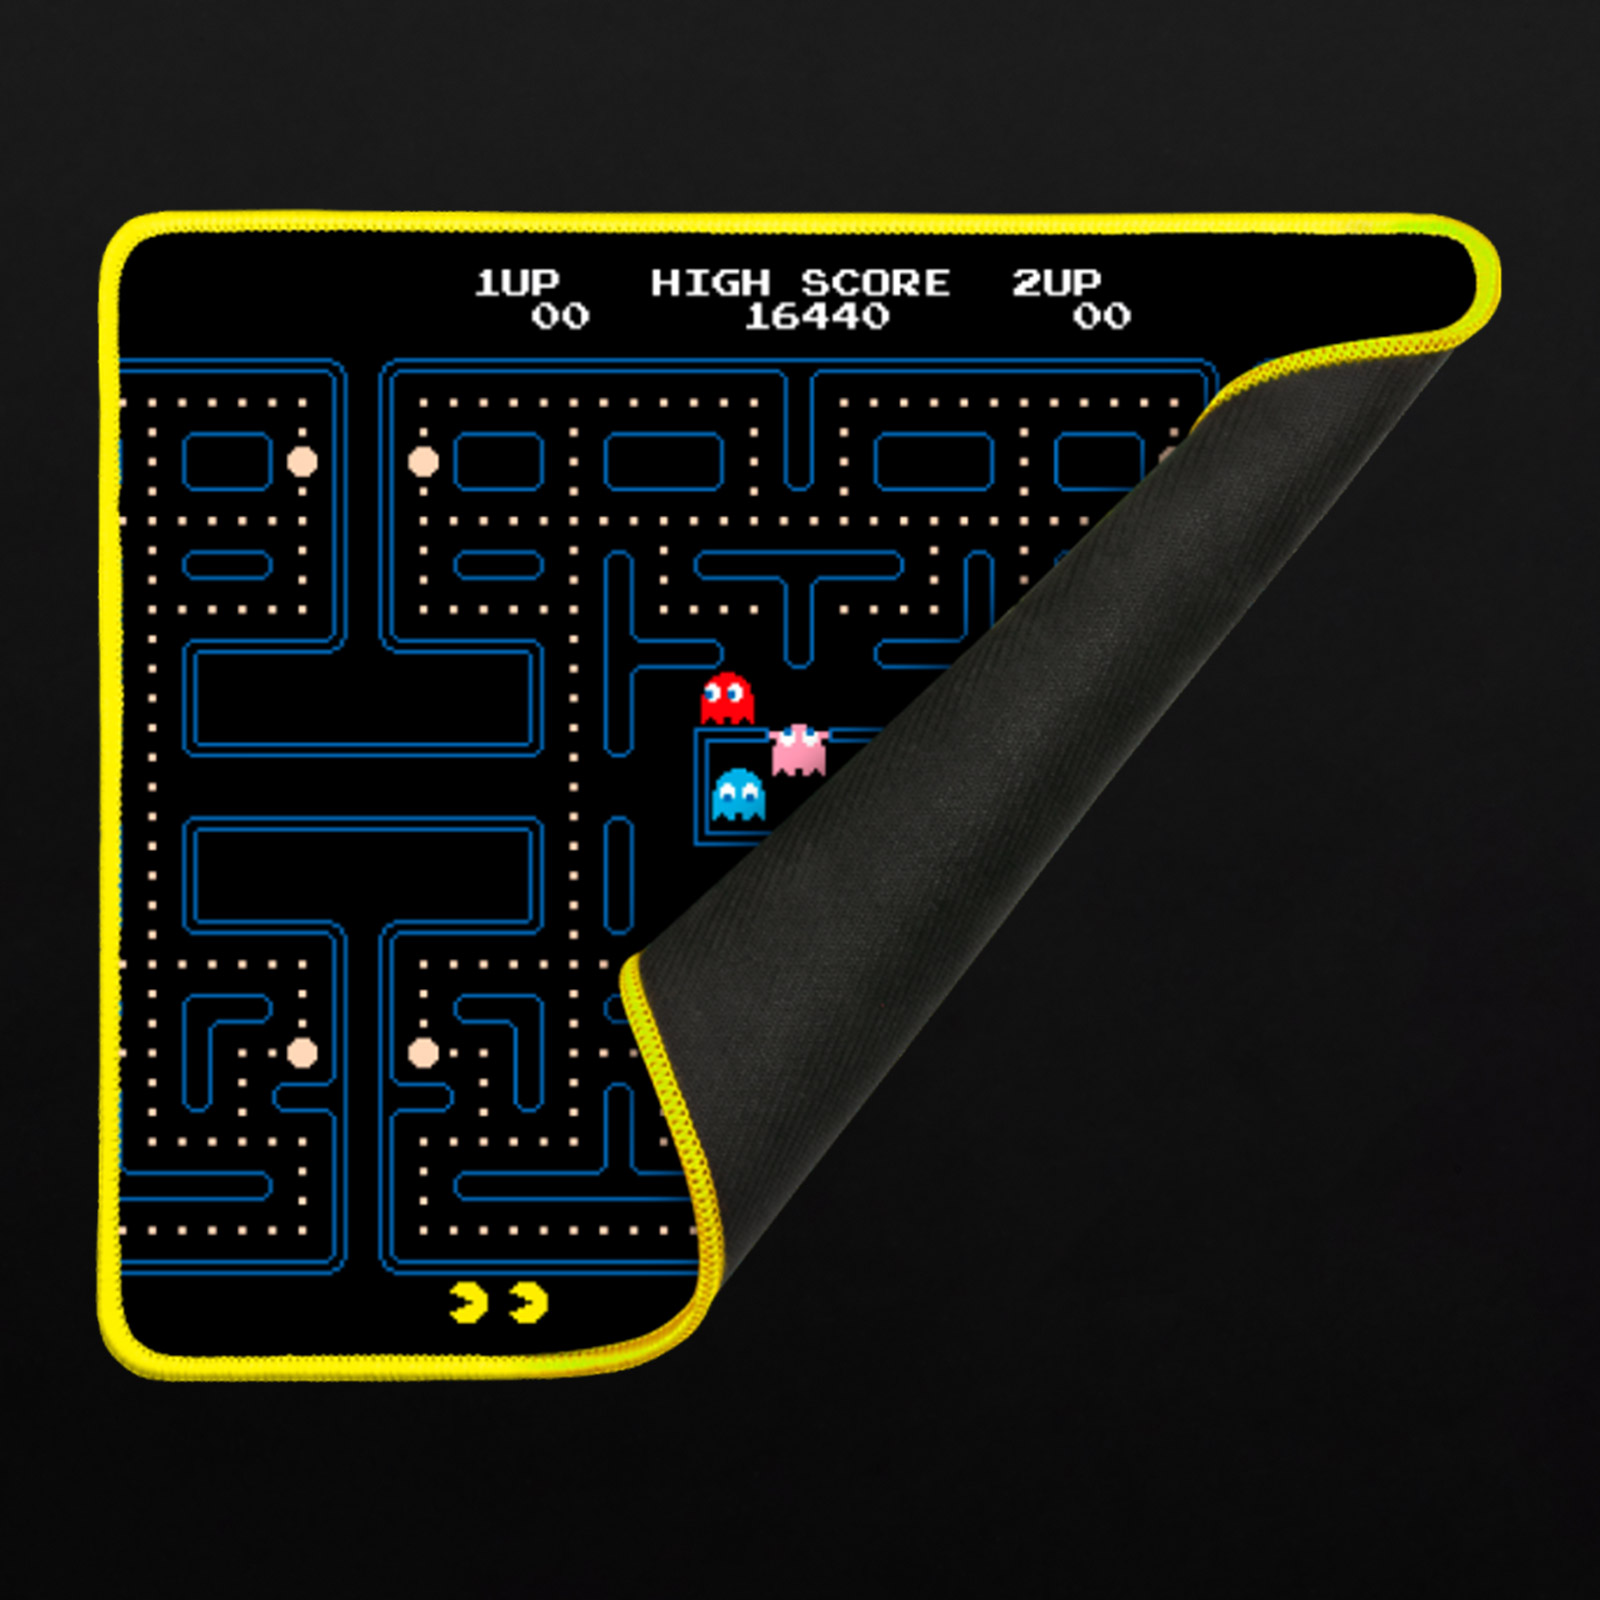 Ensemble tapis de souris repose-poignet motif Pac-Man pour clavier